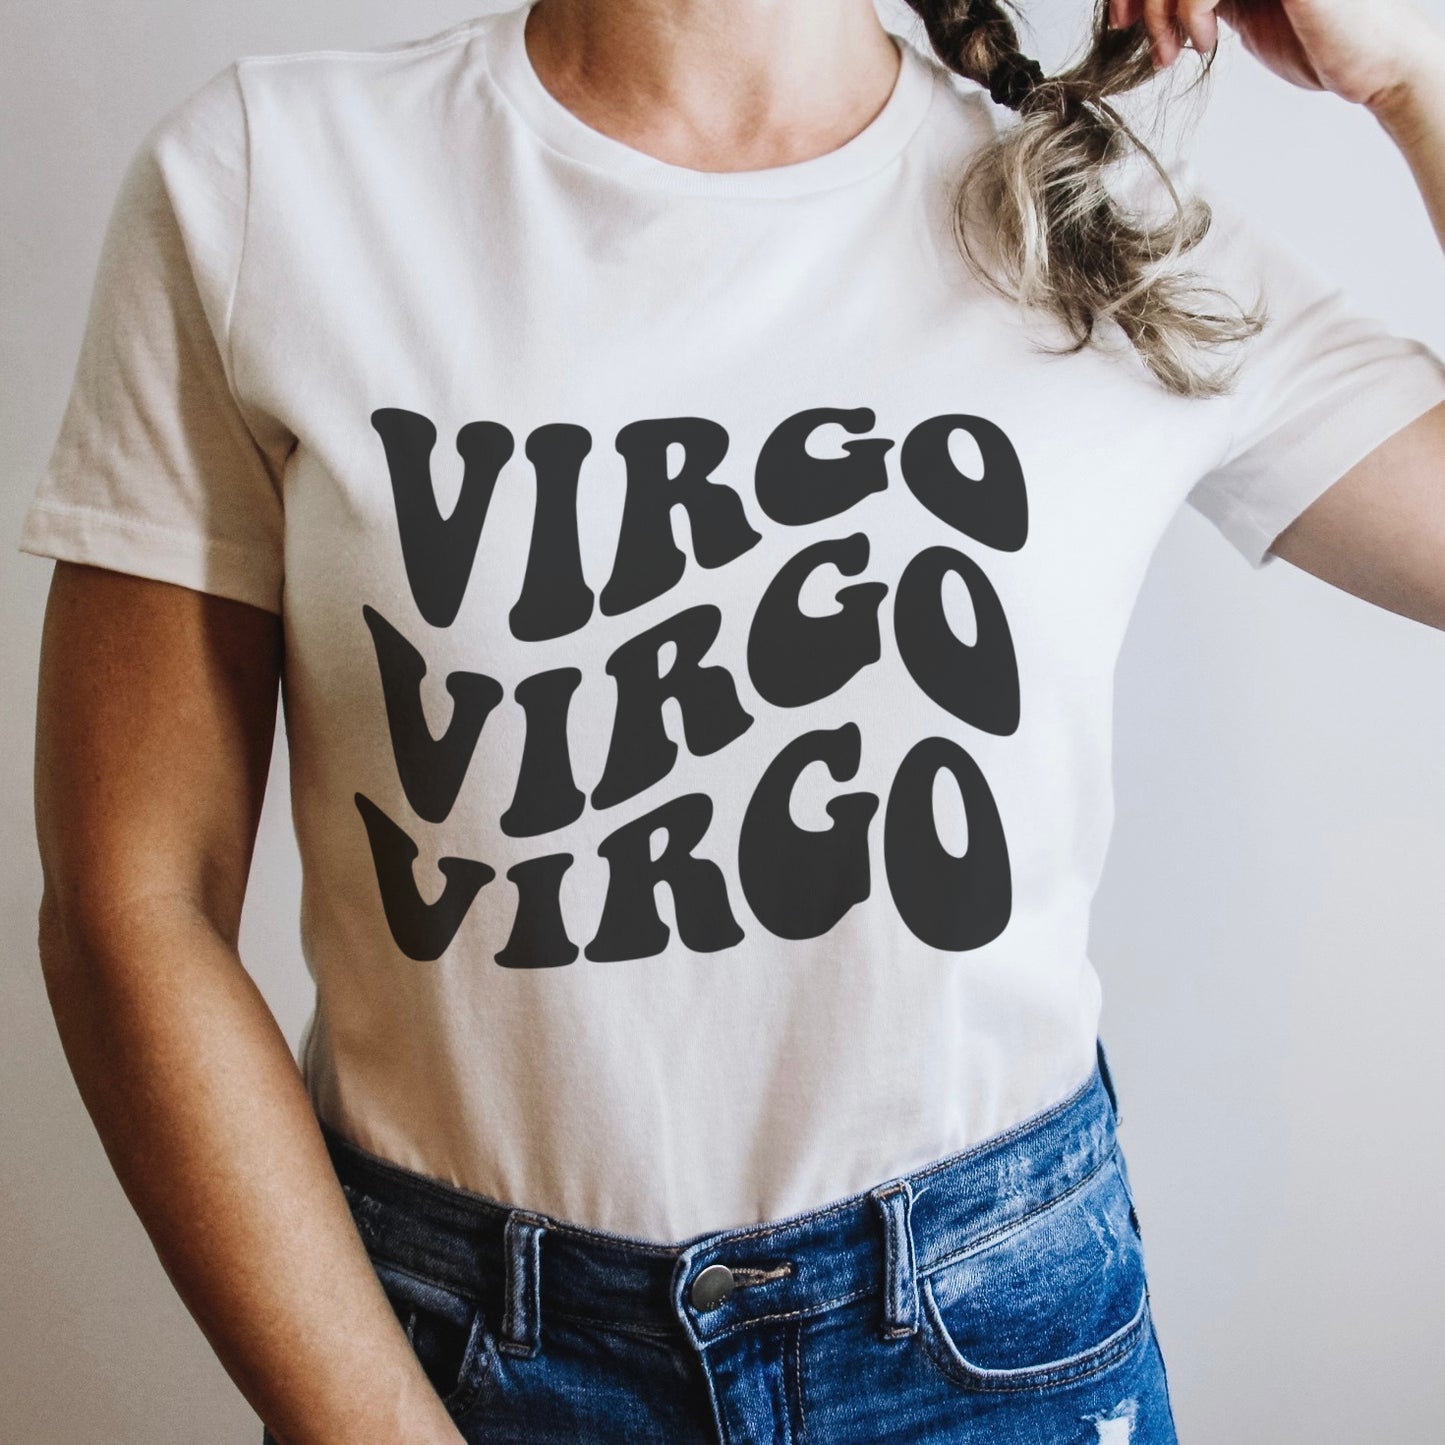 Virgo T-Shirt